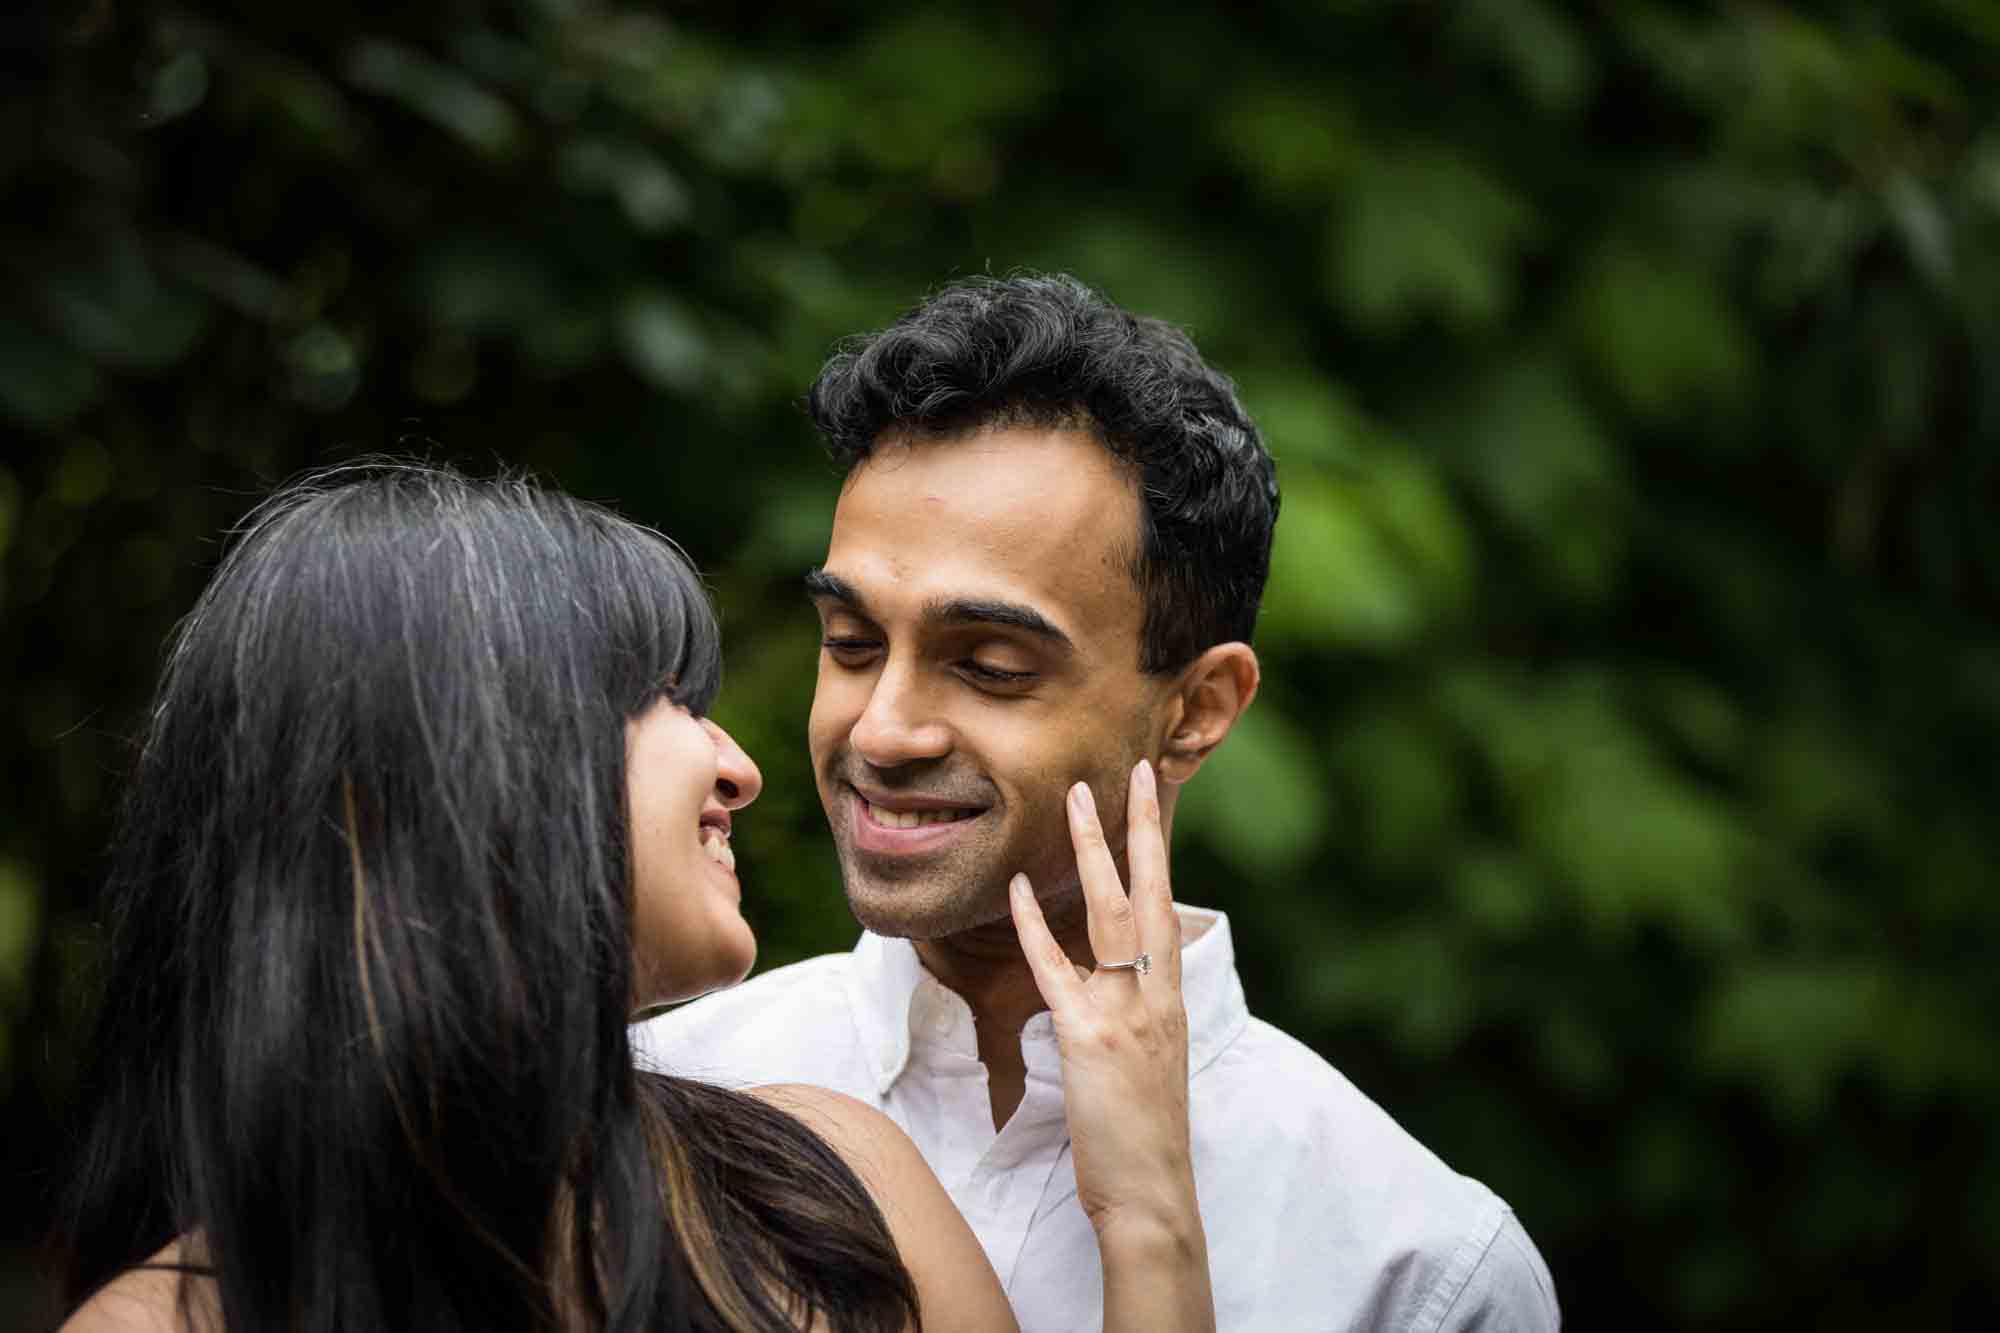 Woman looking back at man and touching his cheek during a Brooklyn Bridge Park engagement photo shoot